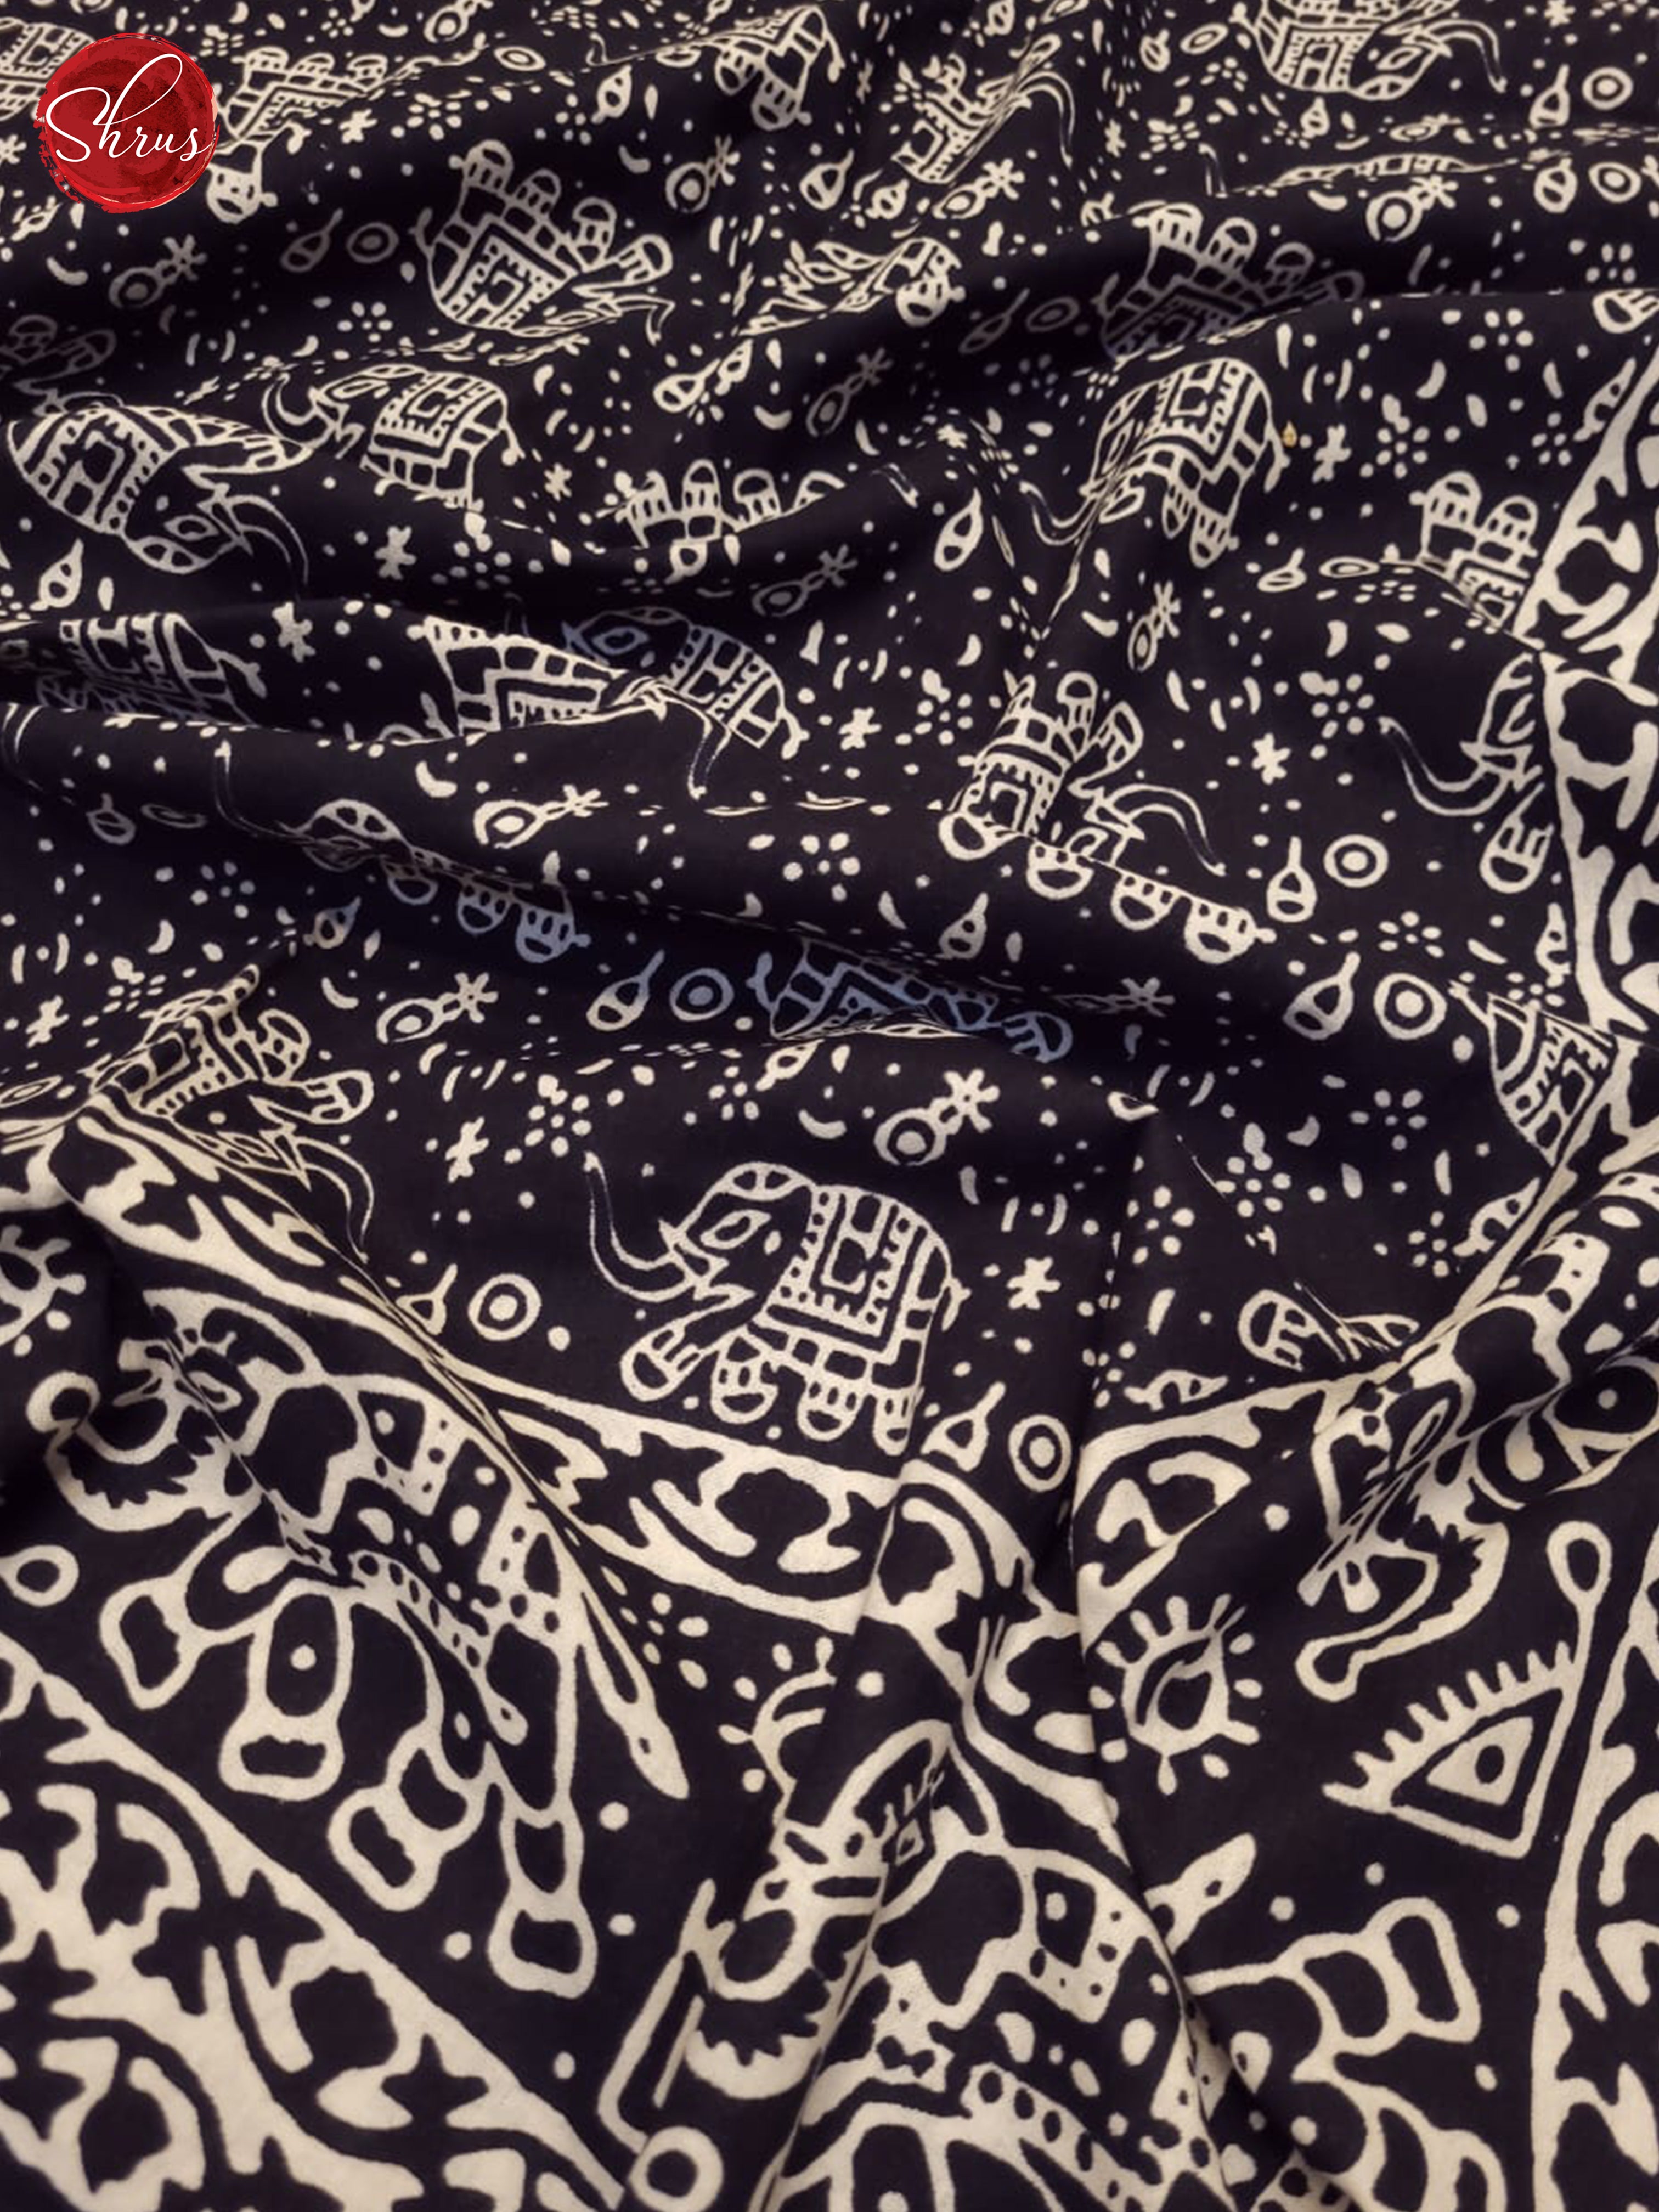 Black - Jaipuri Printed Double Bed Spread